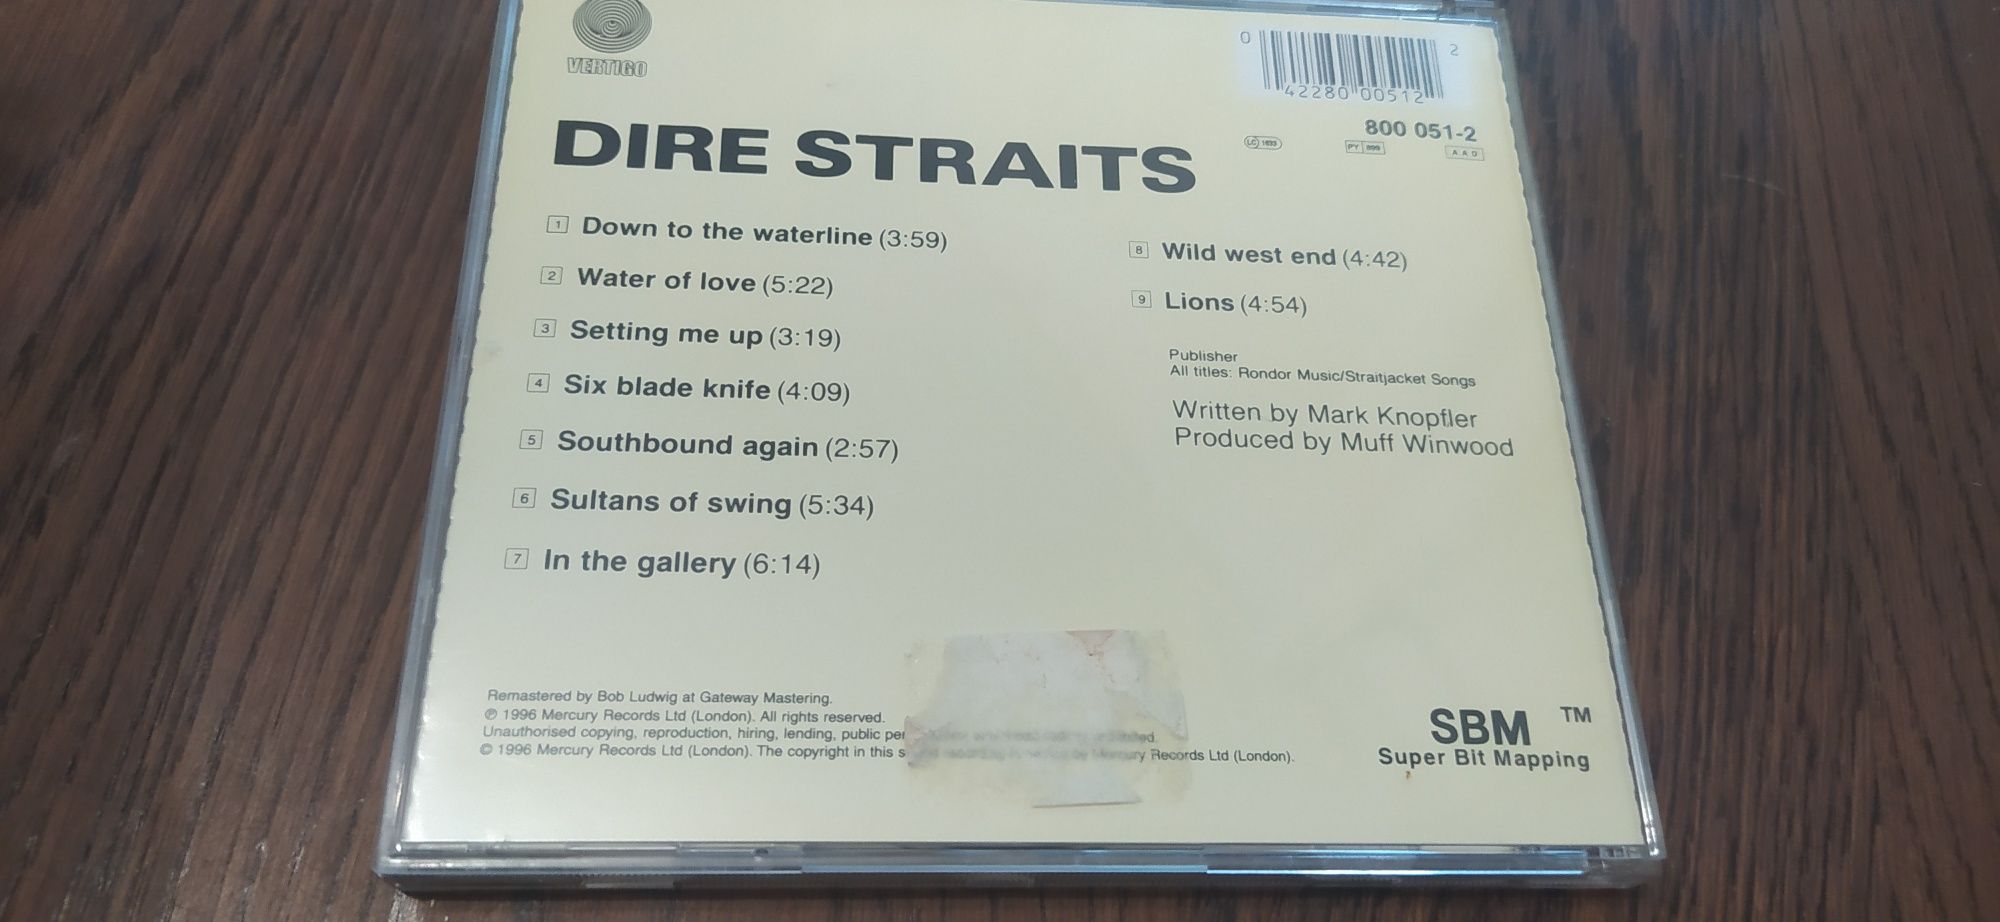 Dire Straits Remastered CD